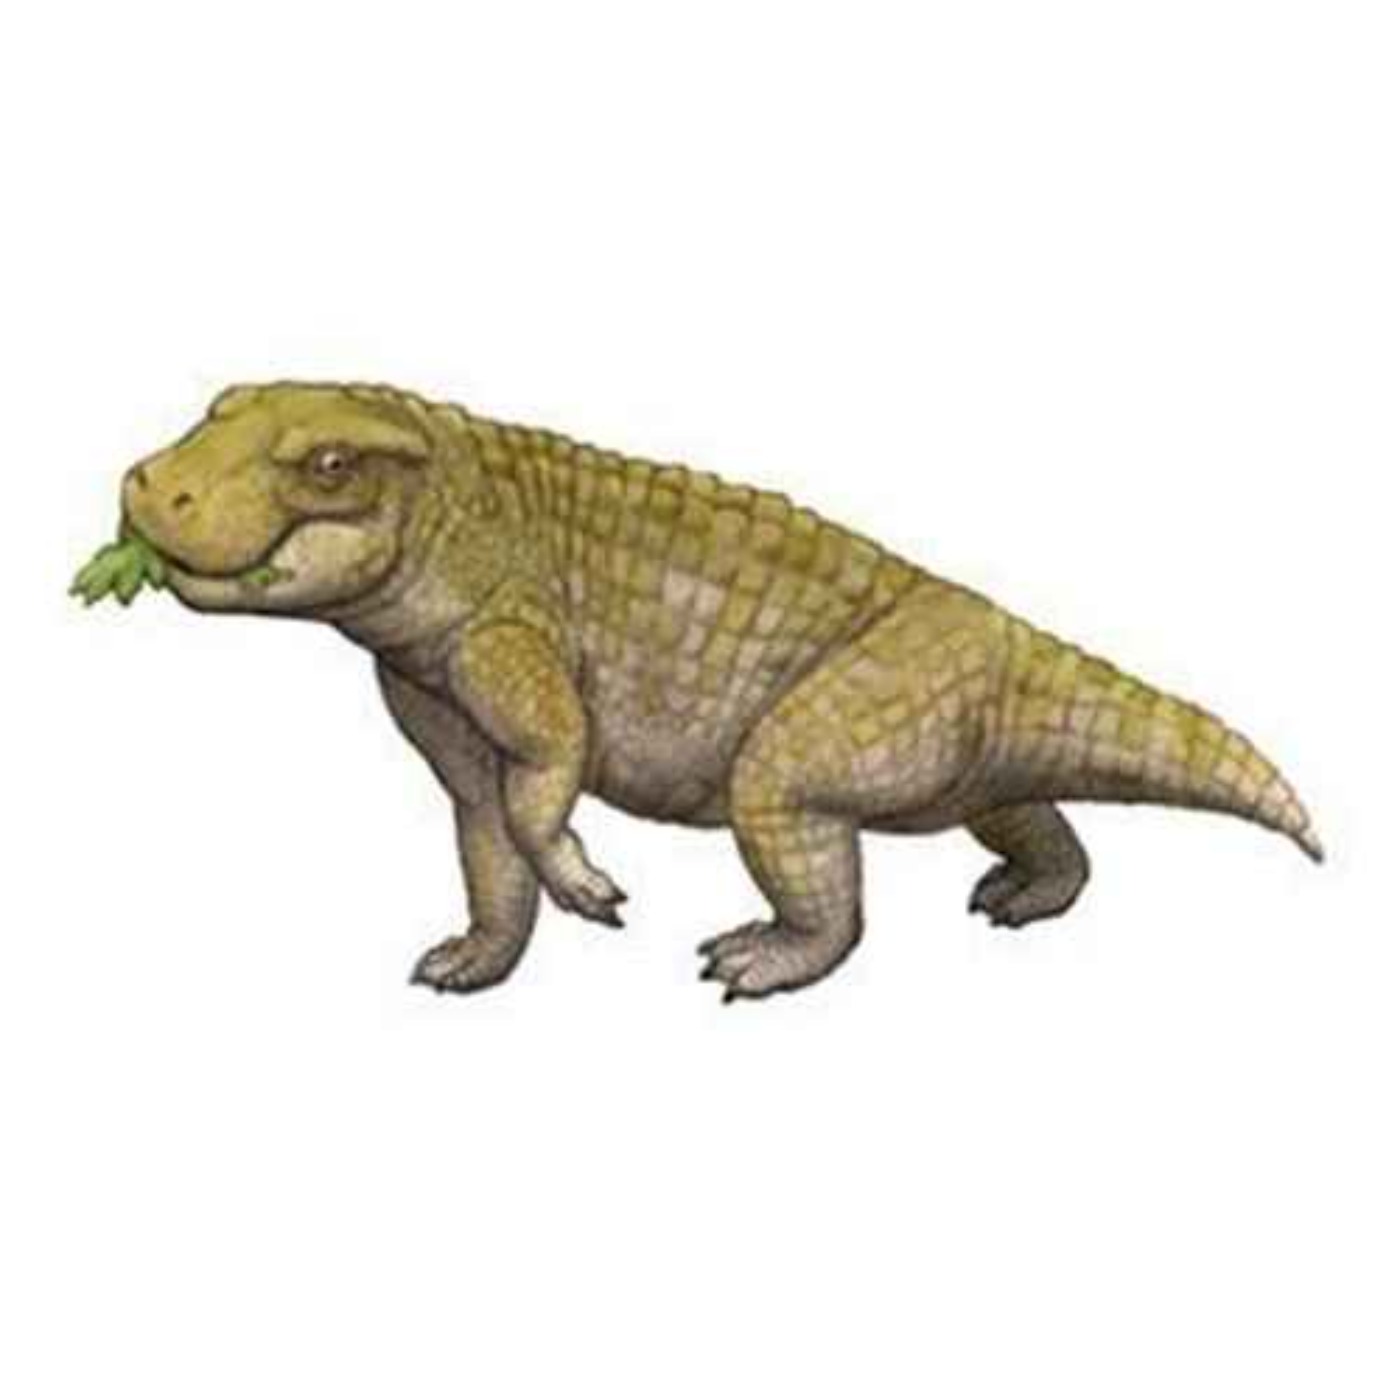 Simosuchus, the Pug-Nosed Crocodile